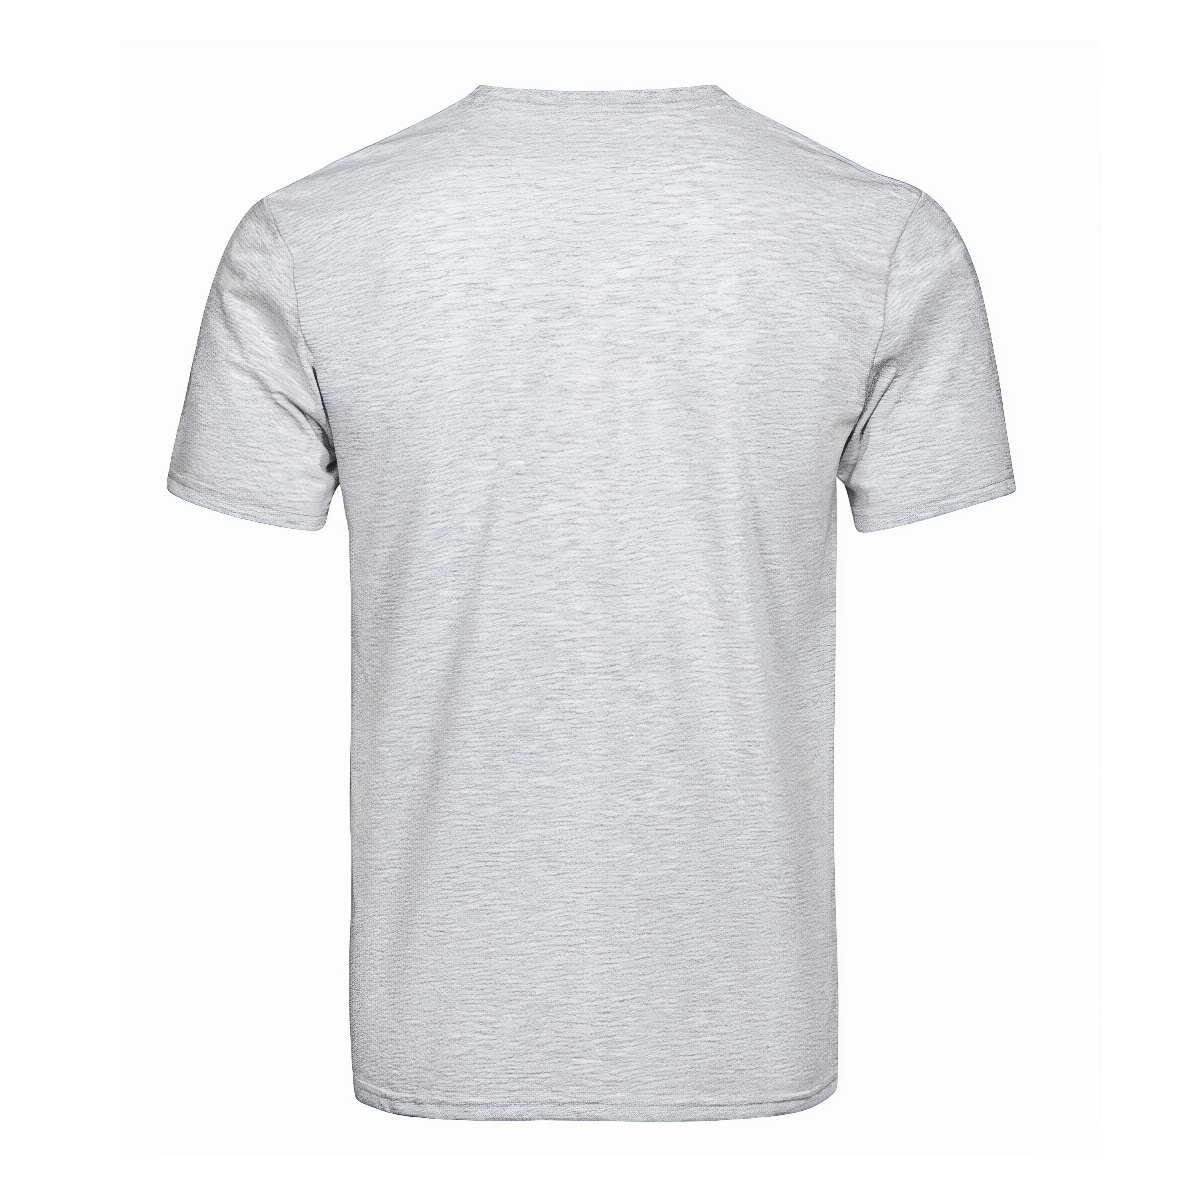 Artz Tartan Crest T-shirt - I'm not yelling style